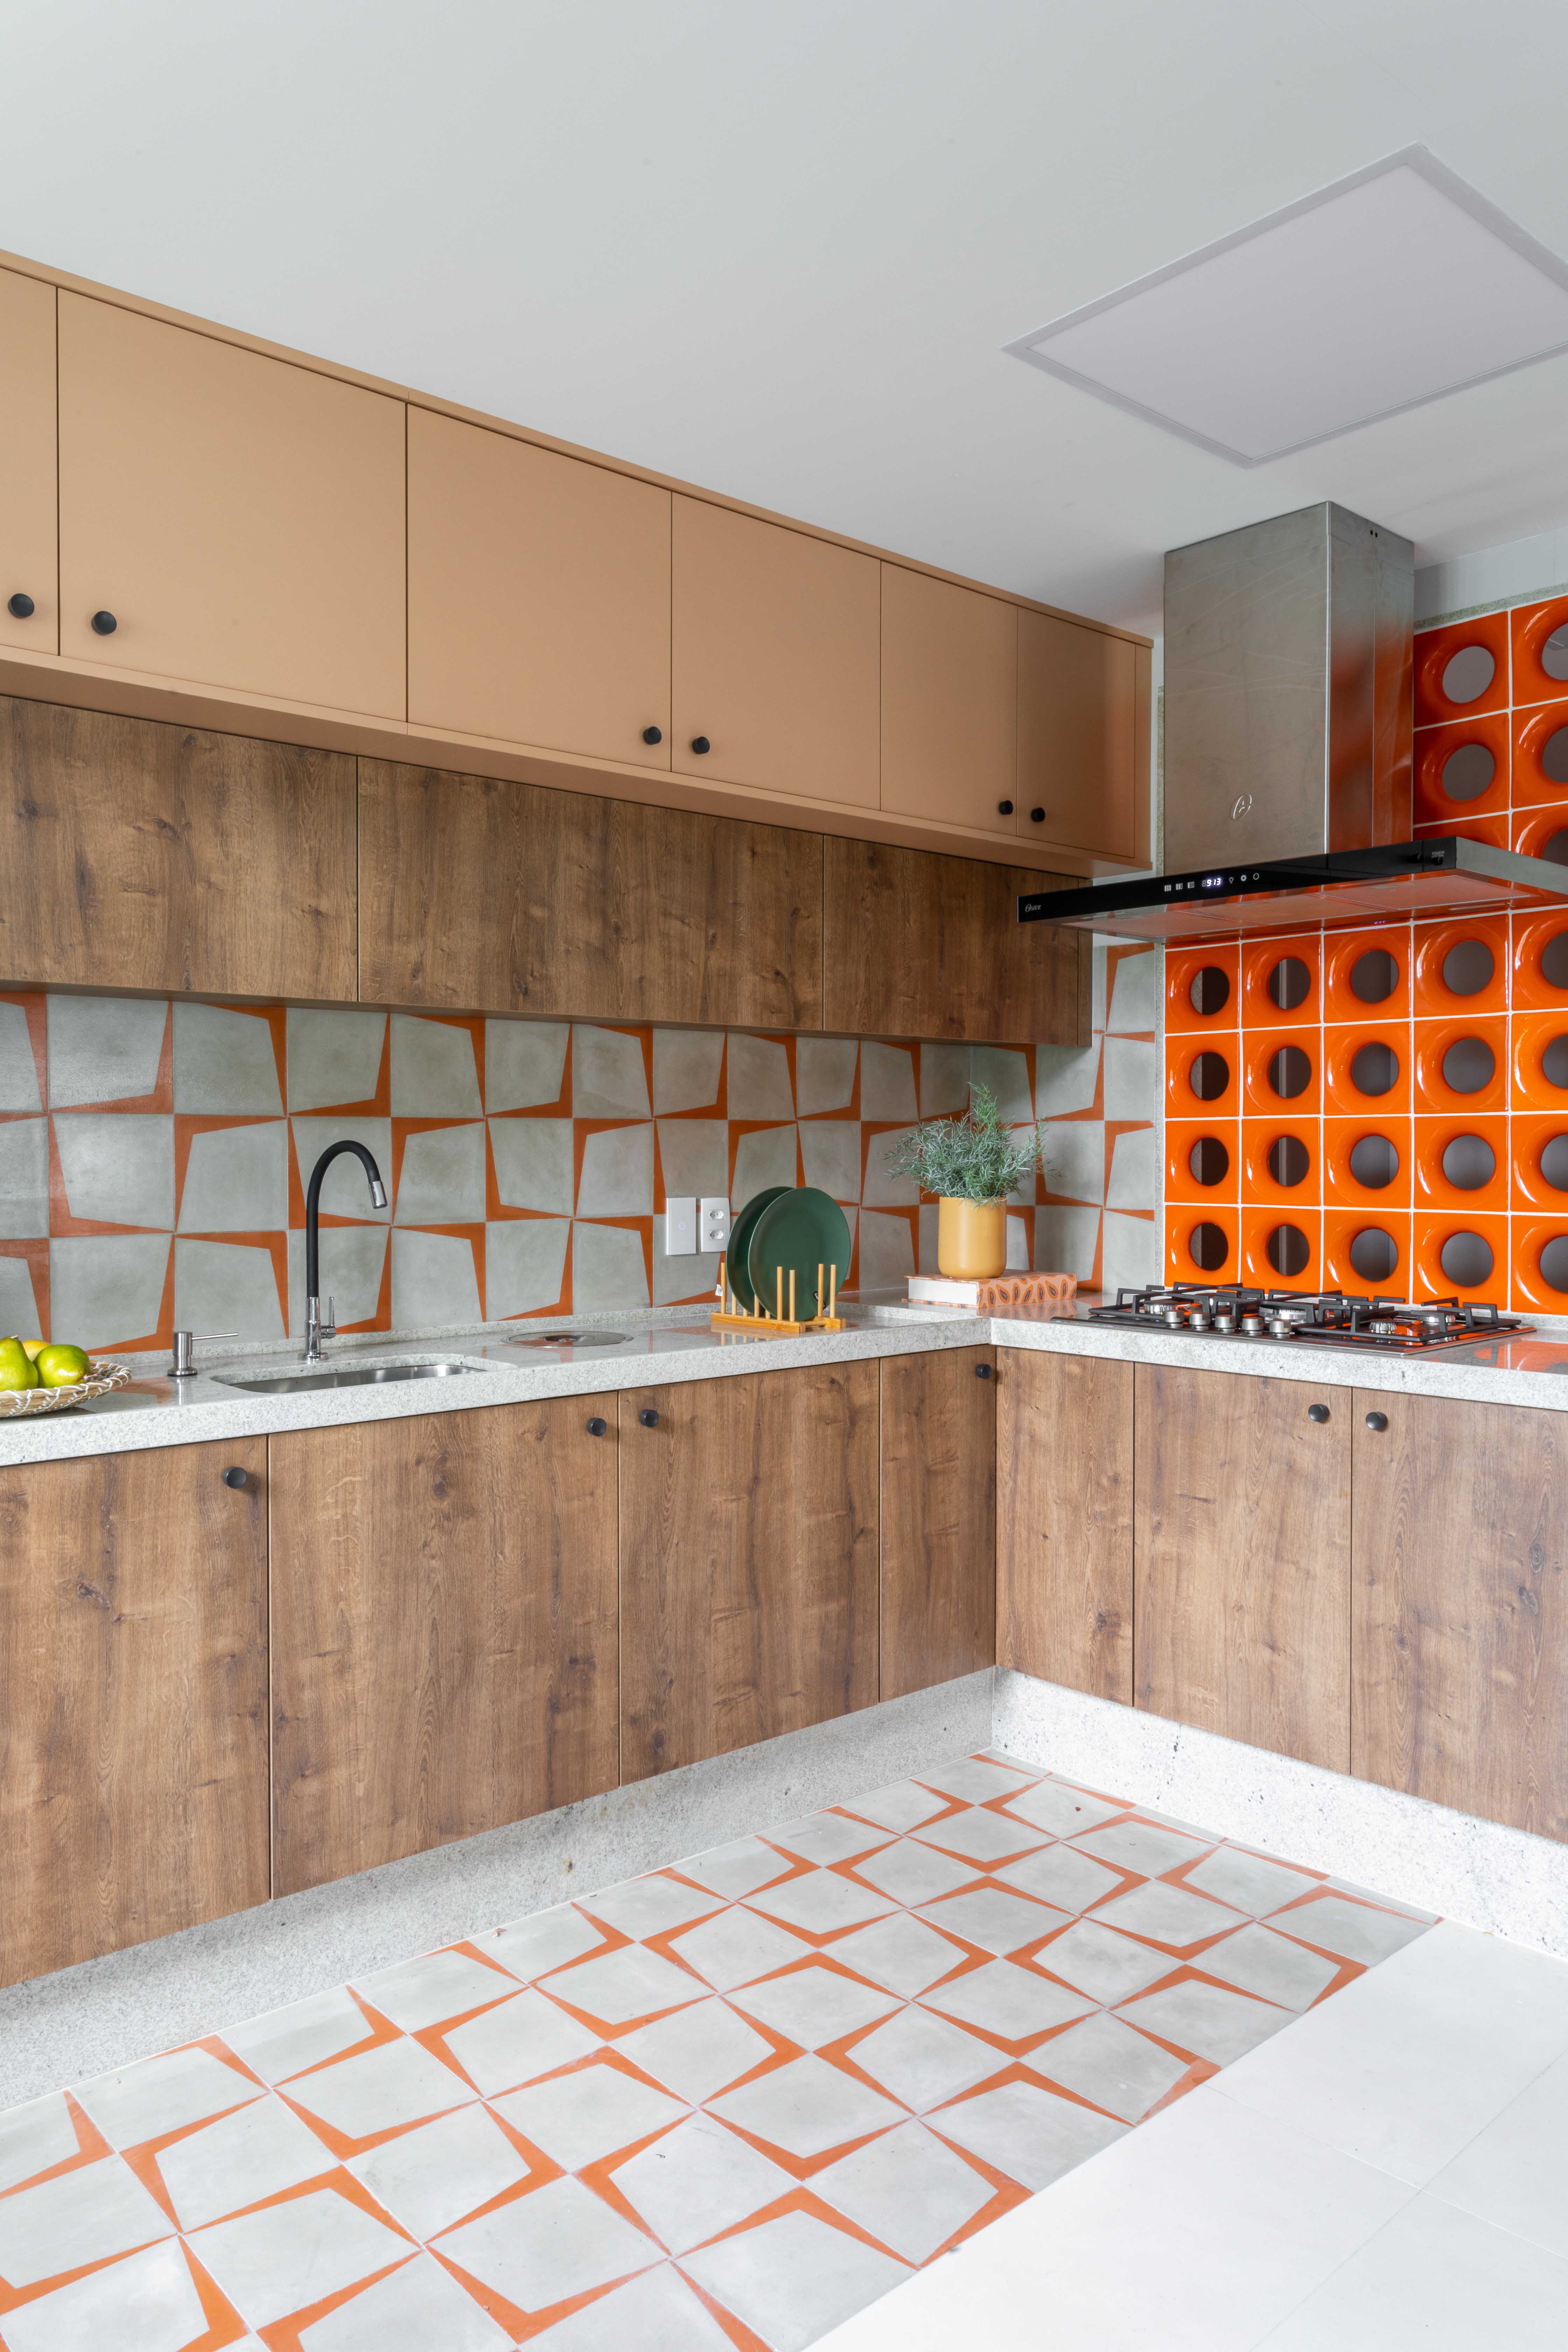 Projeto de Lívia Ornellas. Na foto, cozinha com cobogós laranjas, ladrilhos laranjas, marcenaria e bancada branca.